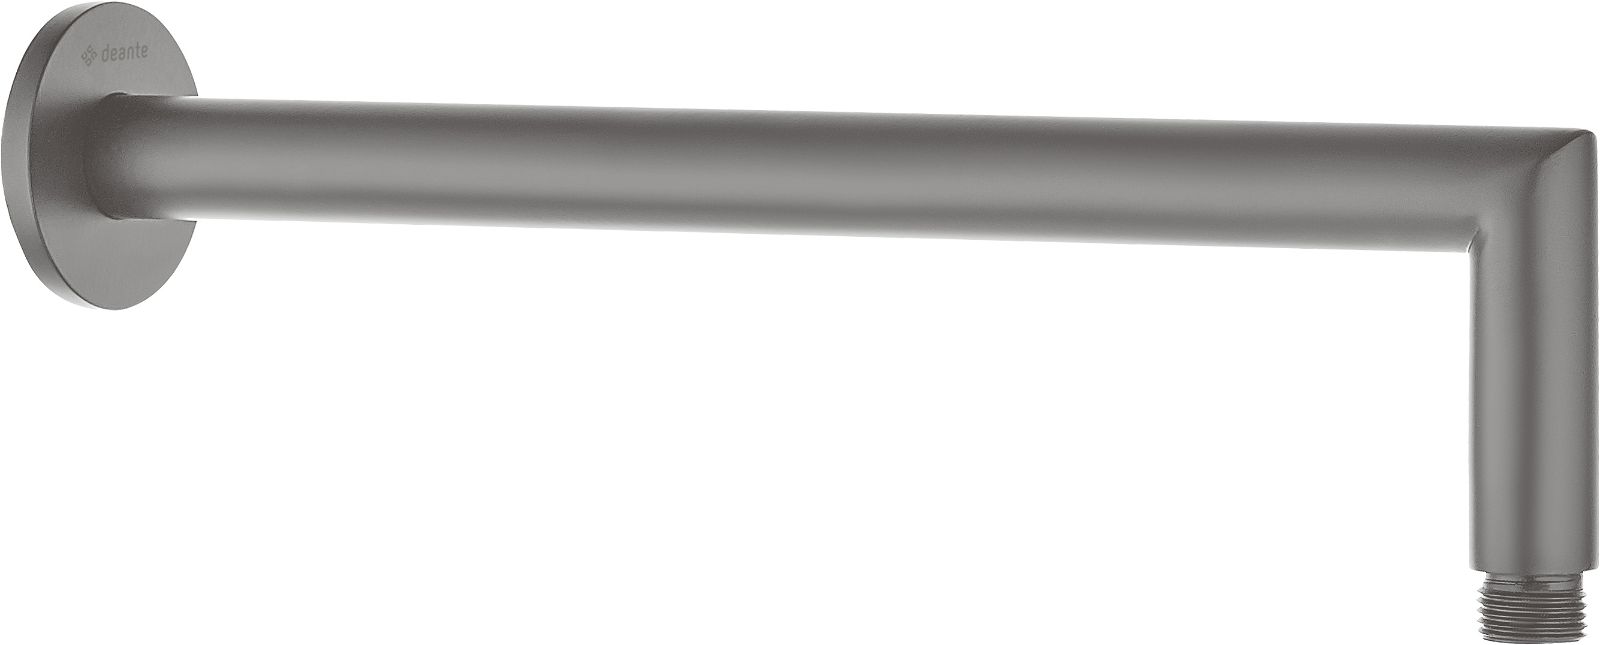 Pipă de umpelre cadă, montare pe perete - 400 mm - NAC_D45K - Główne zdjęcie produktowe